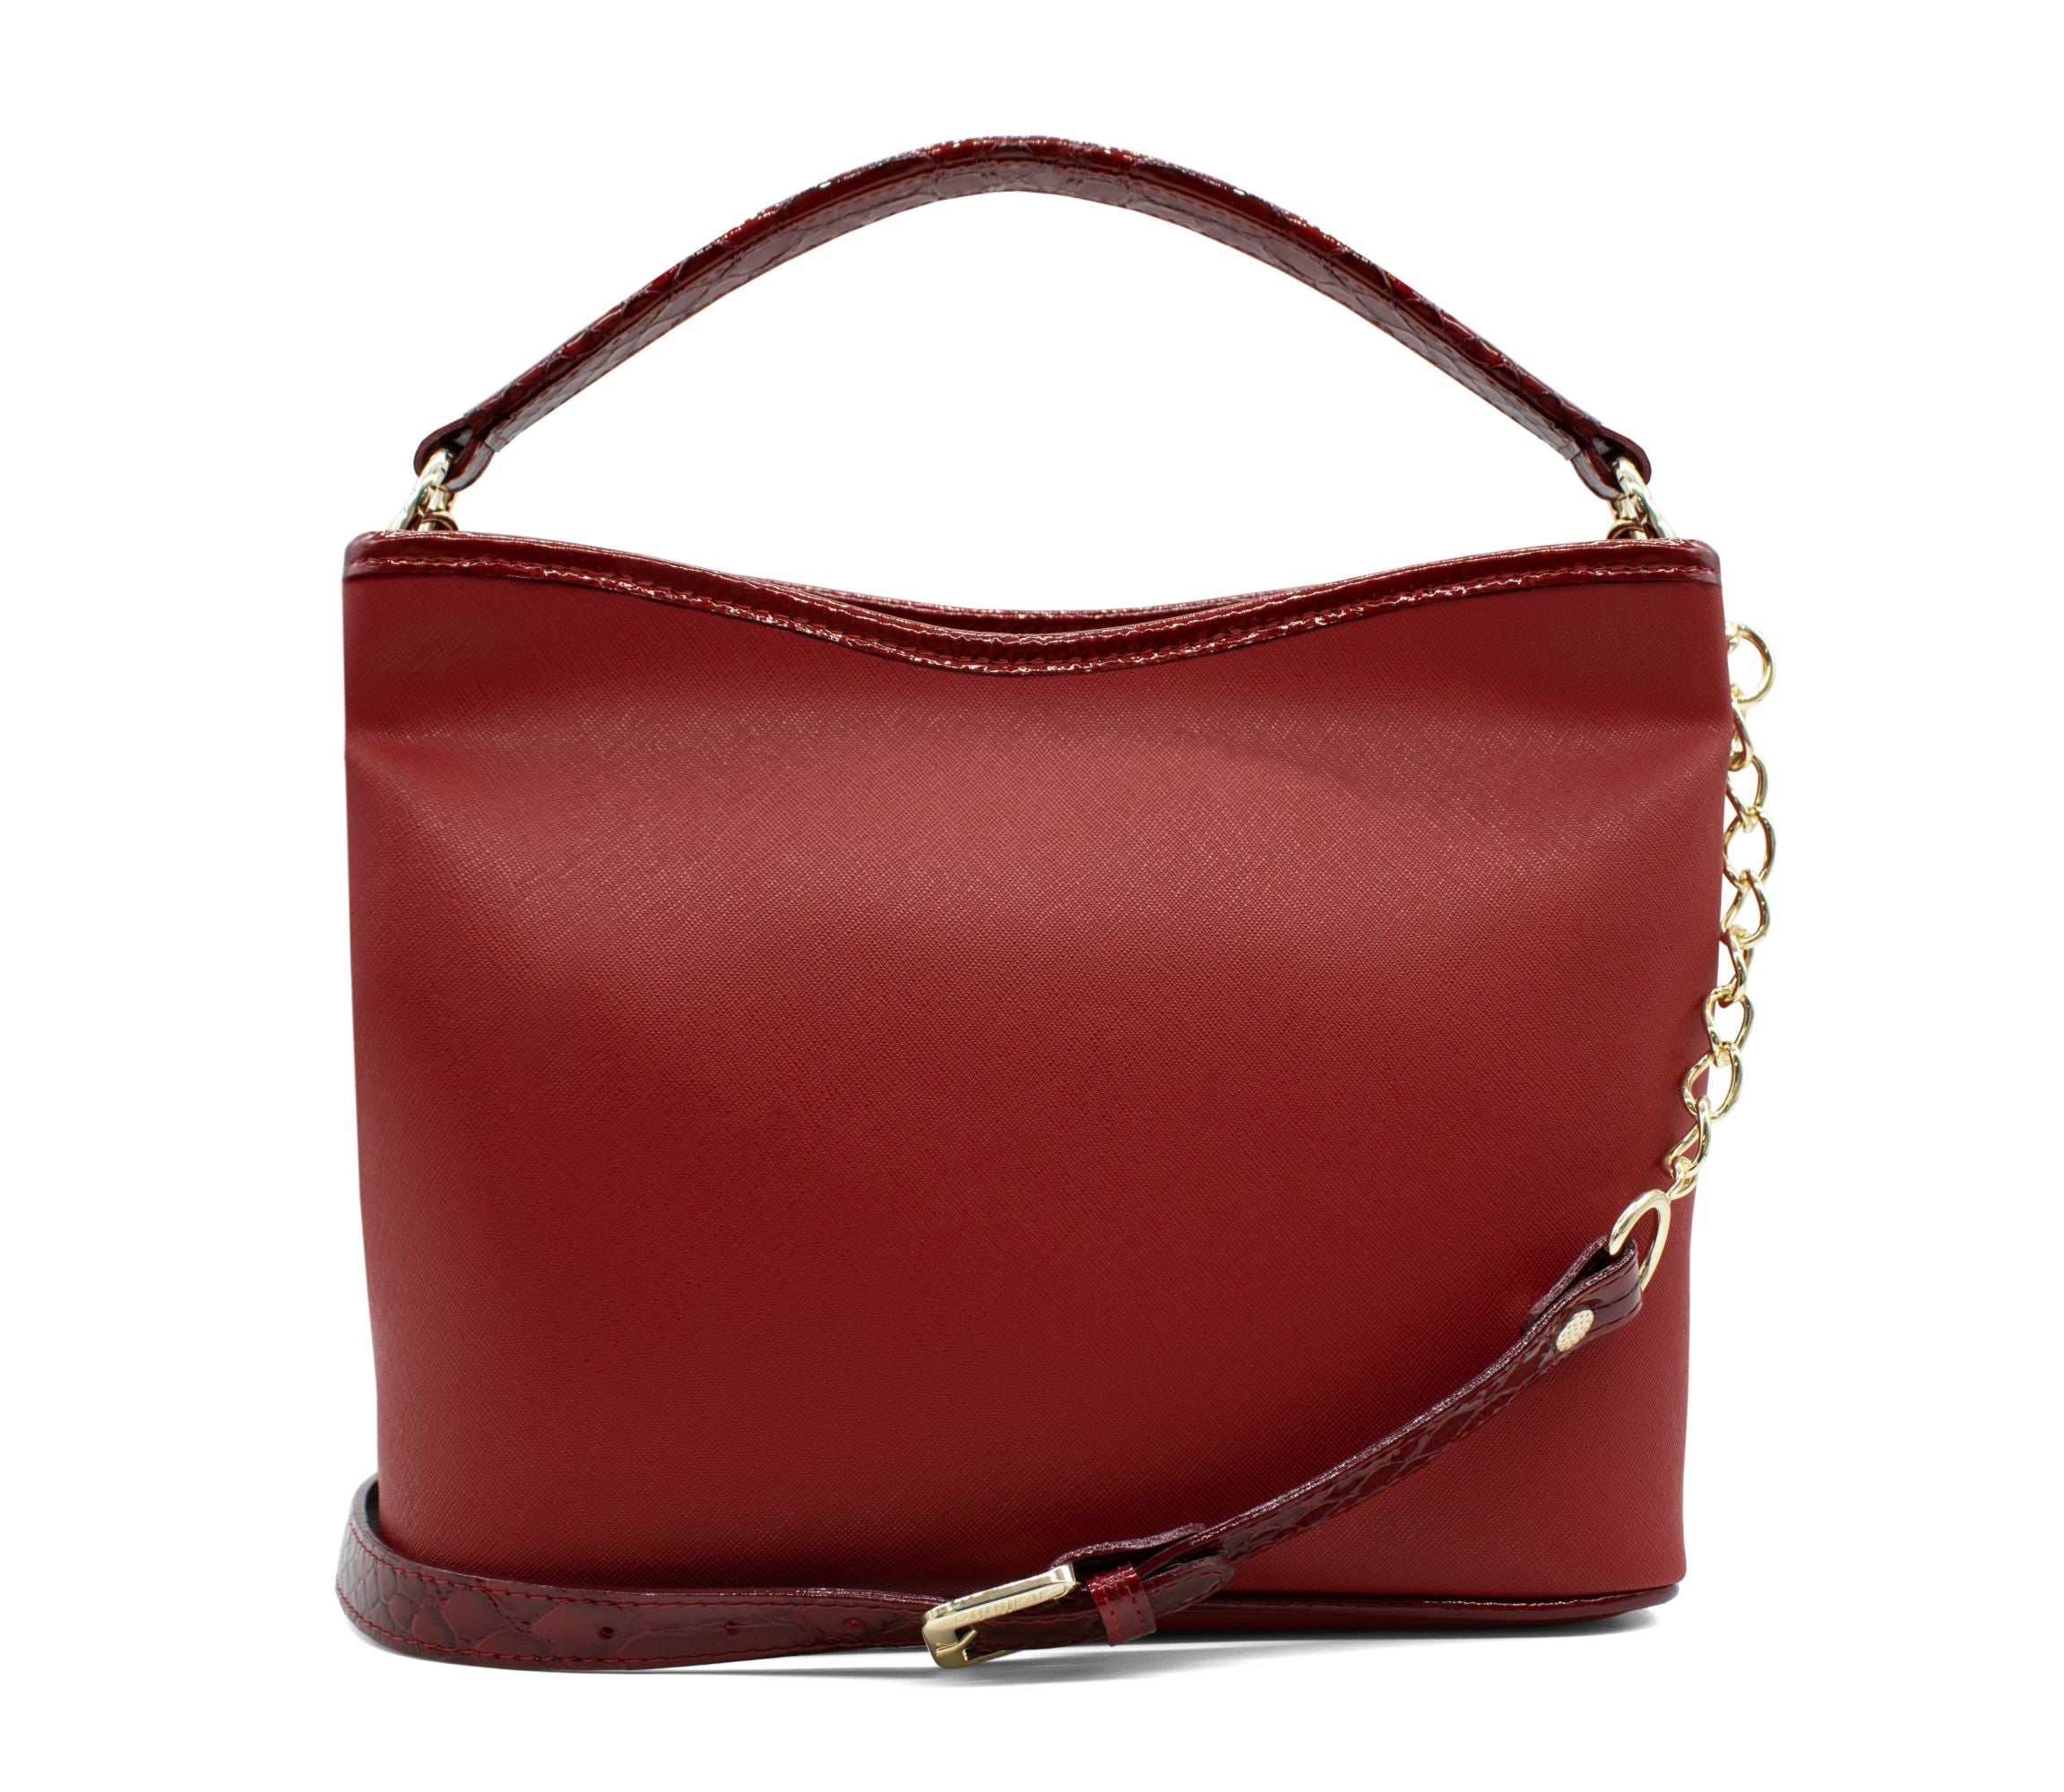 Cavalinho Grace Handbag SKU 18250470.04 #color_DarkRed / White